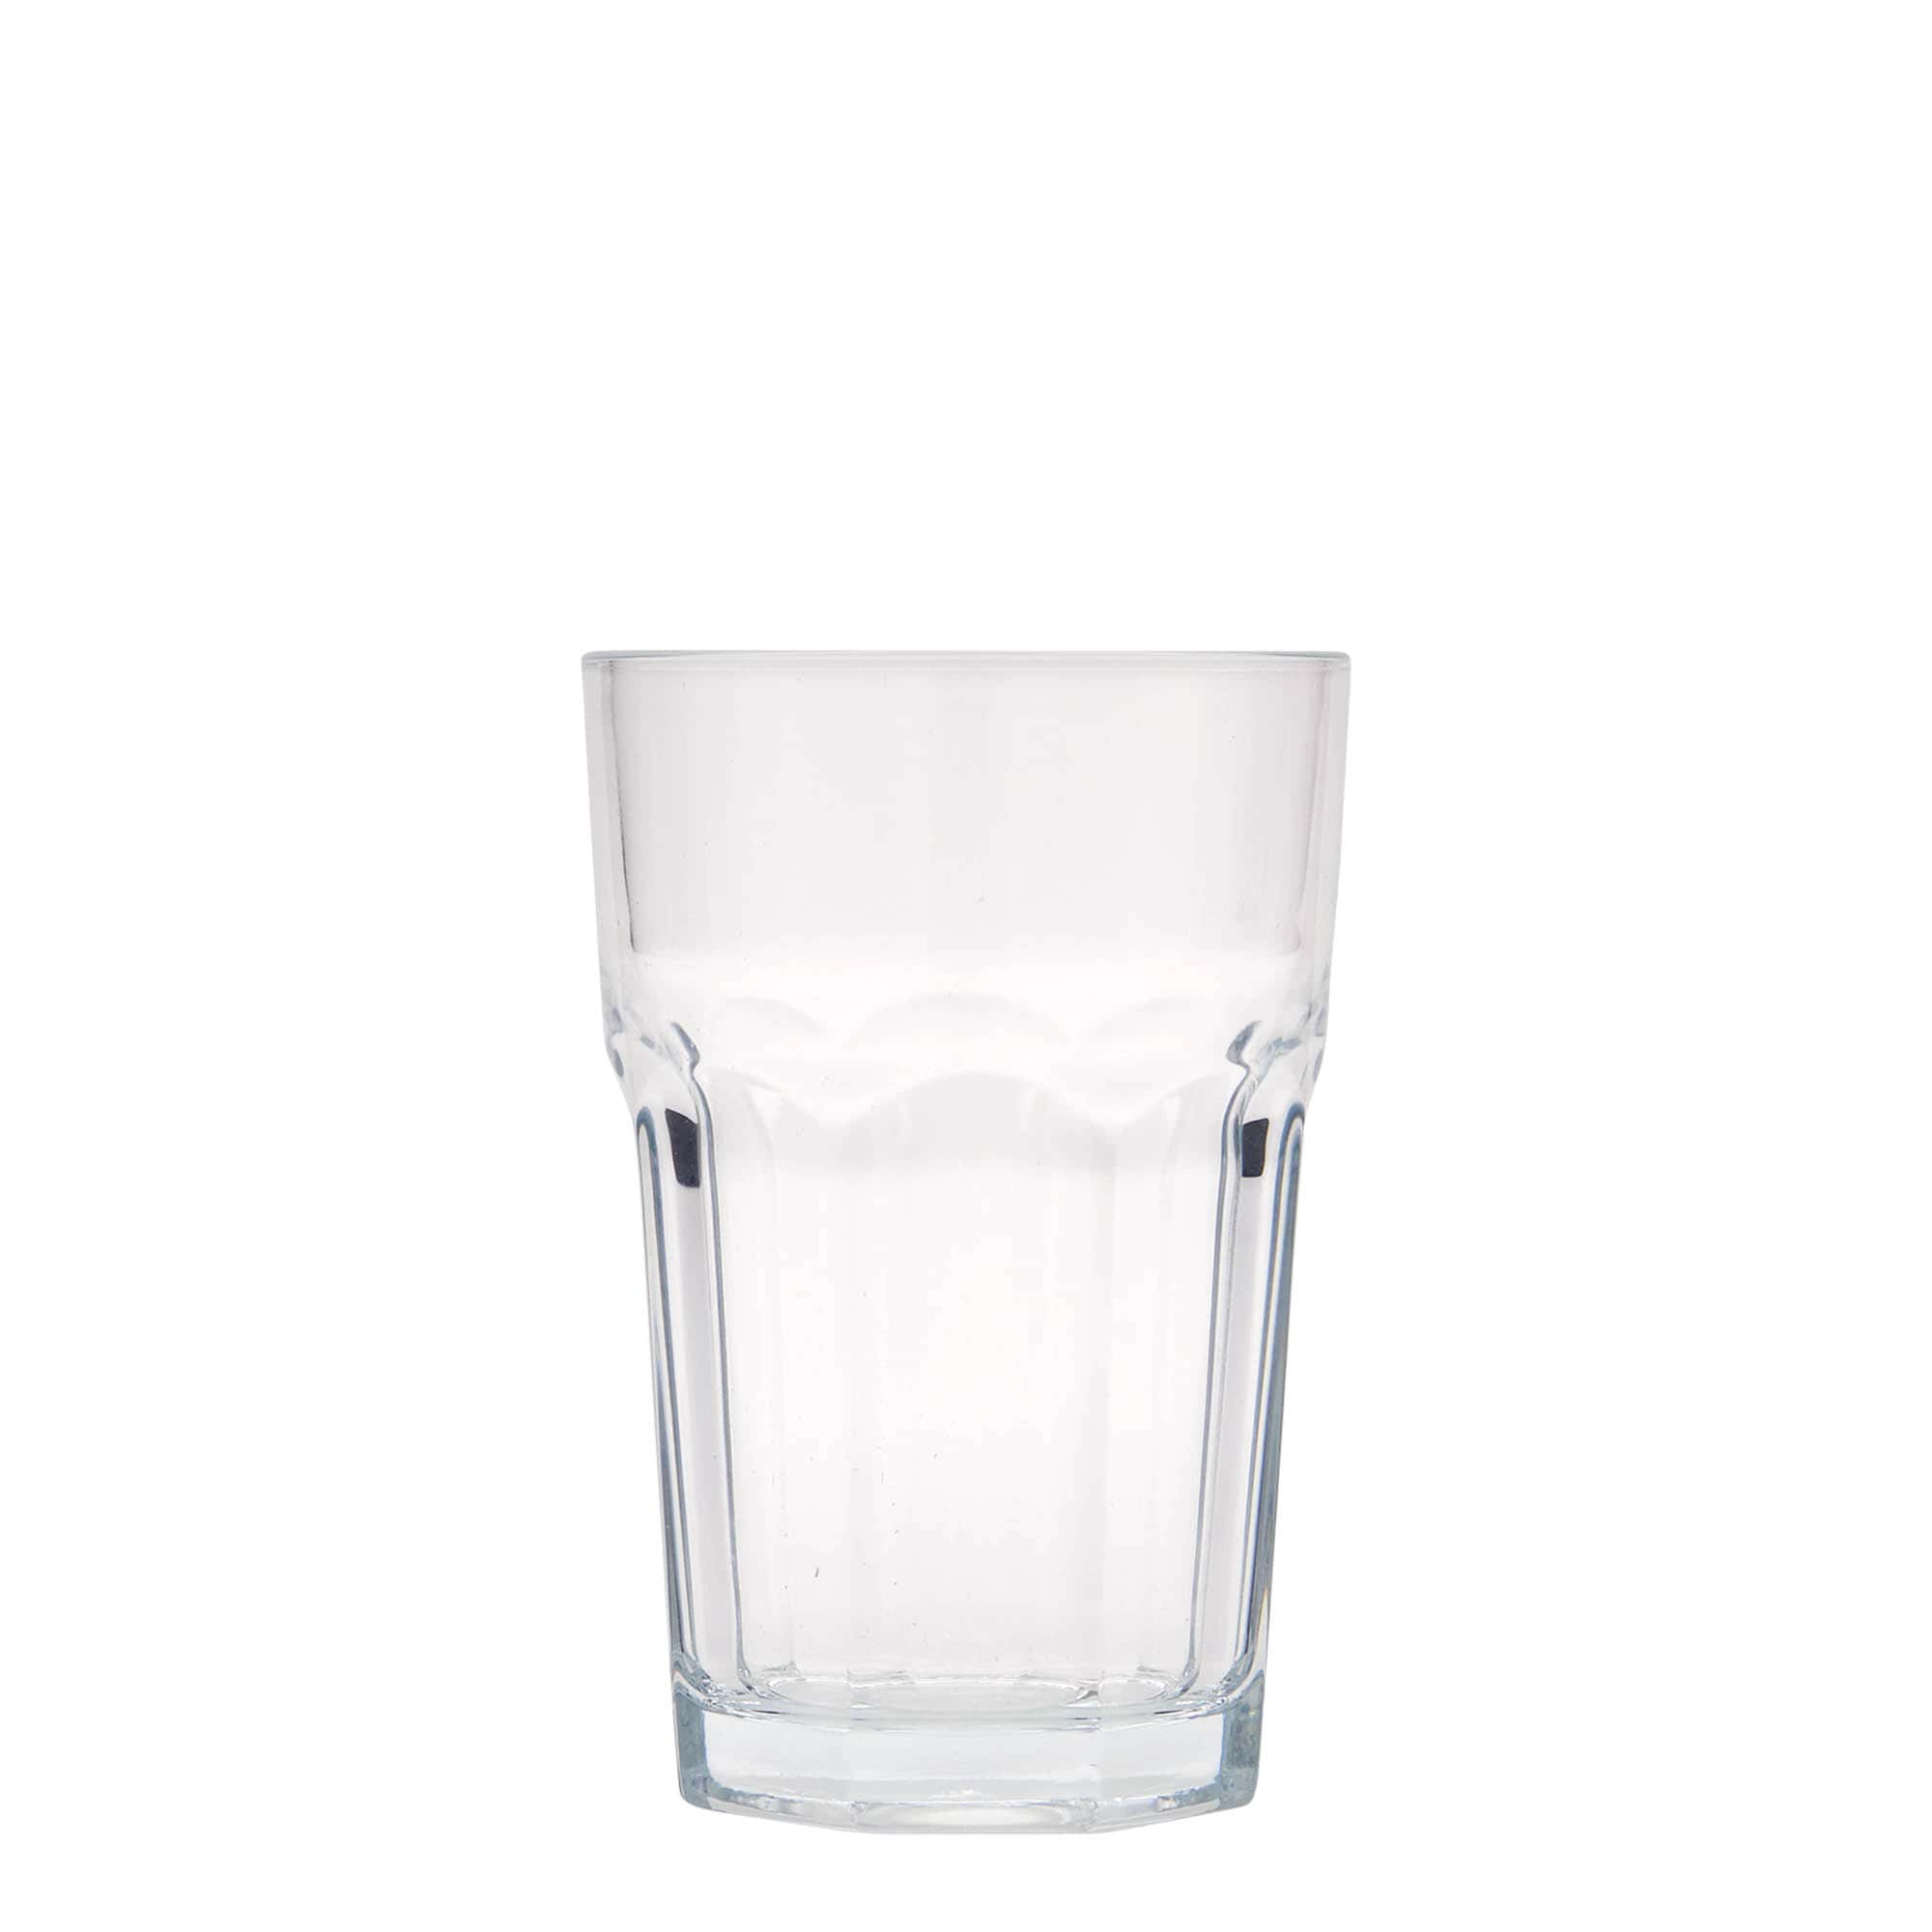 300 ml drinking glass 'Casablanca', glass